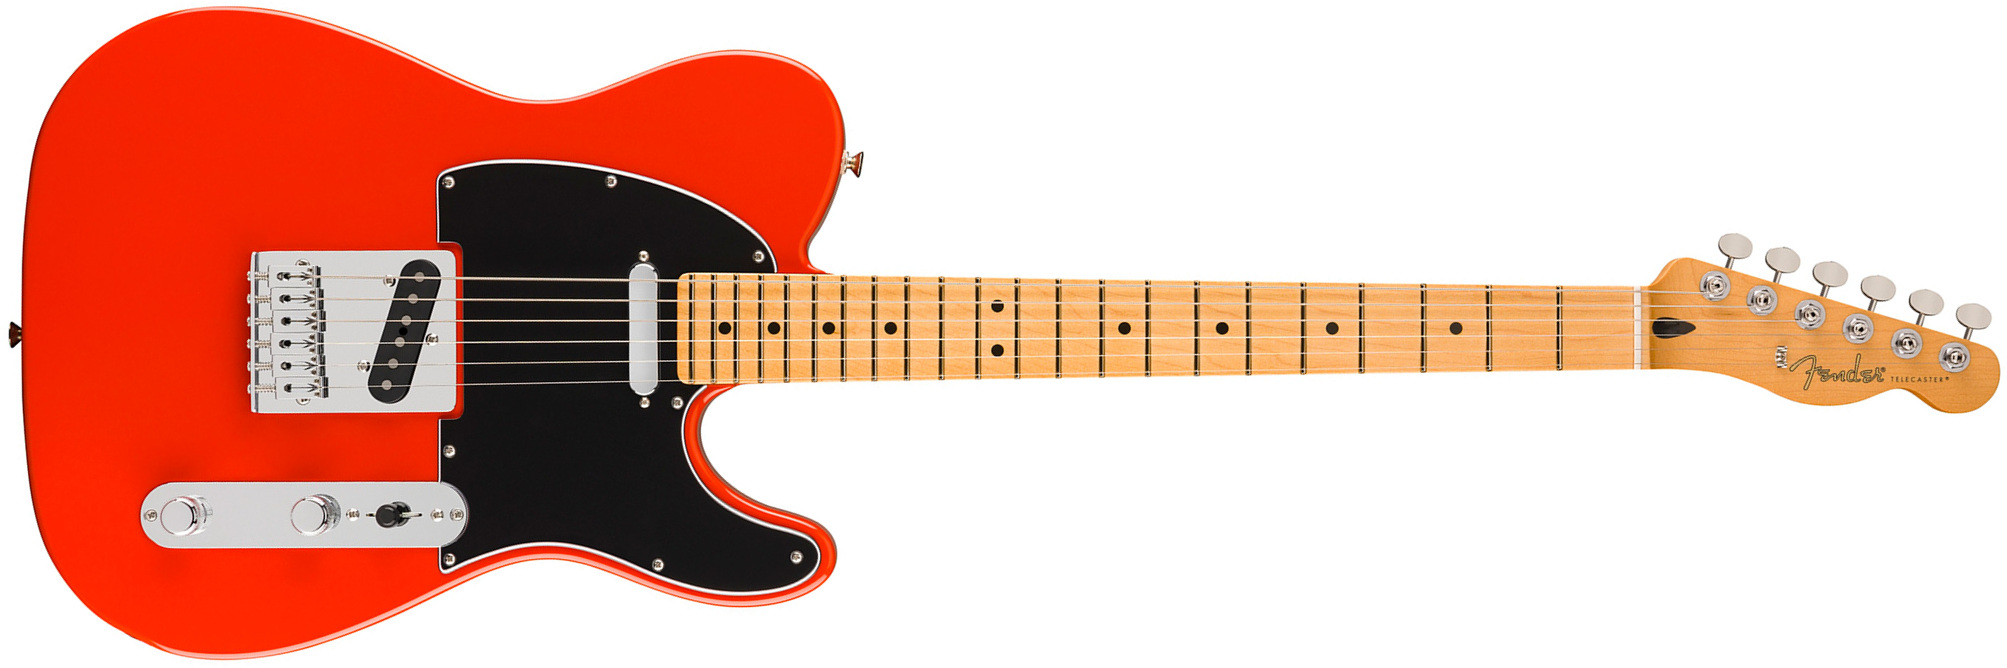 Fender Tele Player Ii Mex Aulne 2s Ht Mn - Coral Red - Televorm elektrische gitaar - Main picture